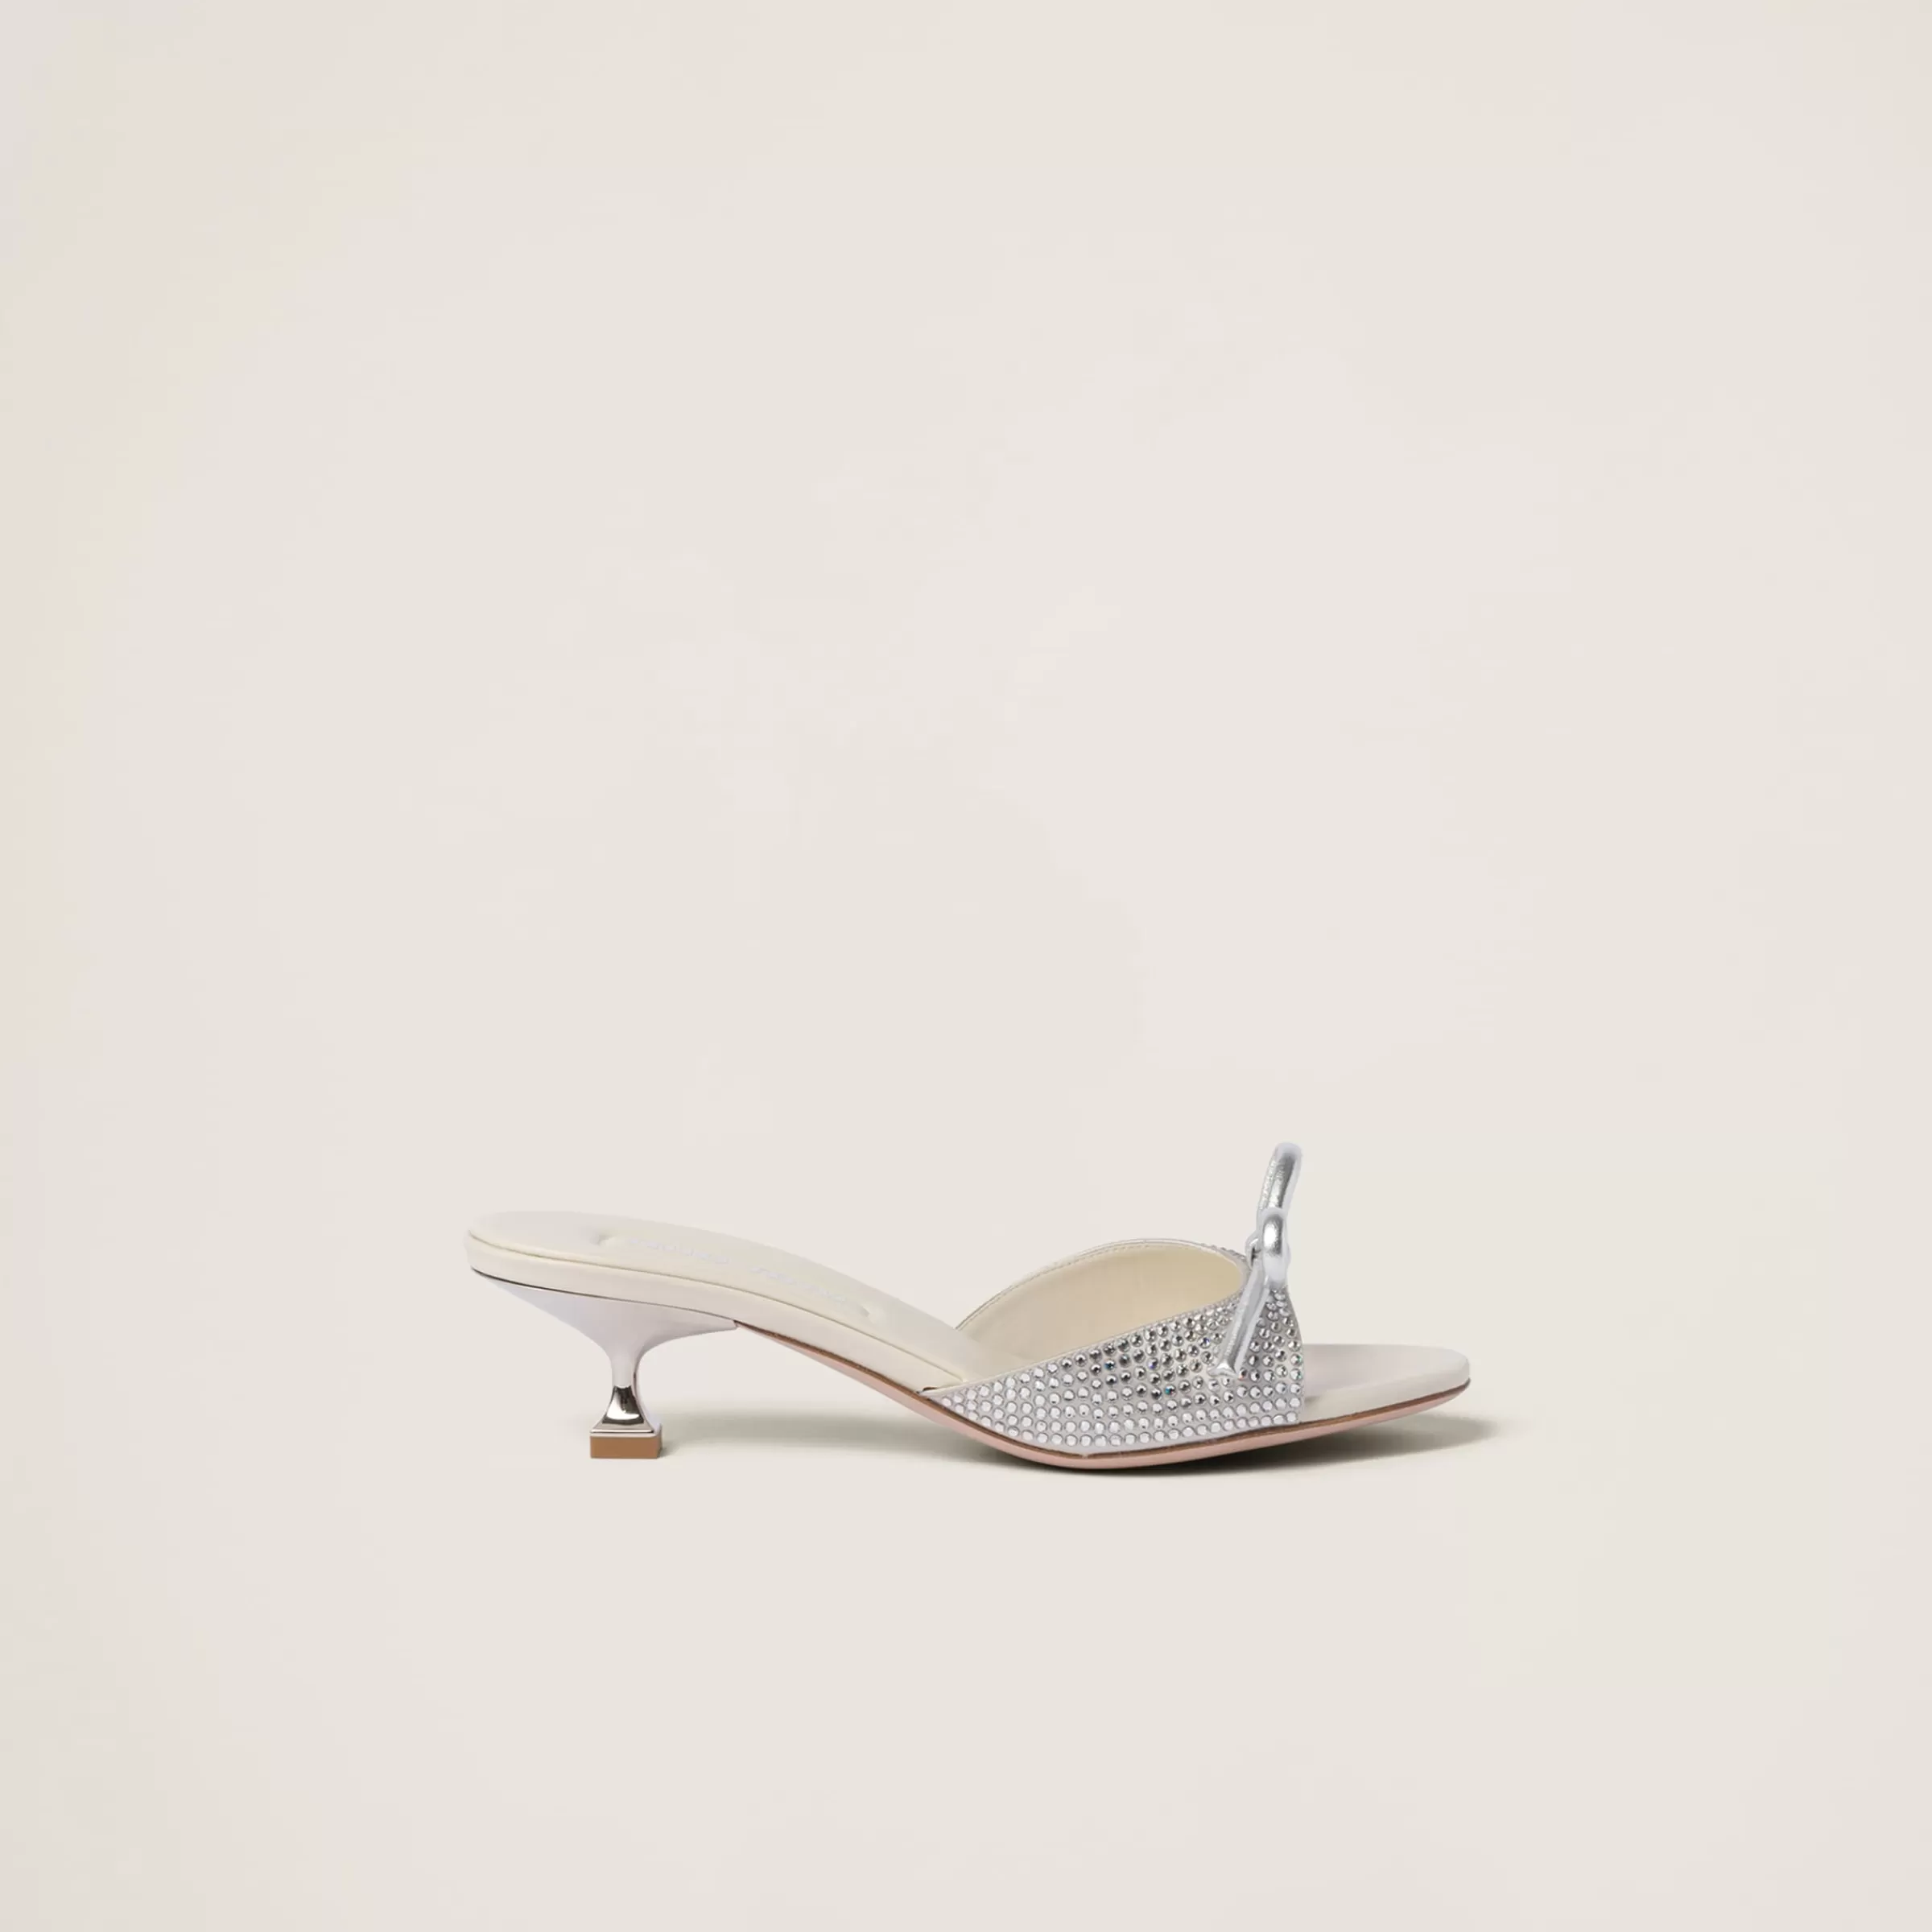 Miu Miu Satin Sandals With Artificial Crystals |